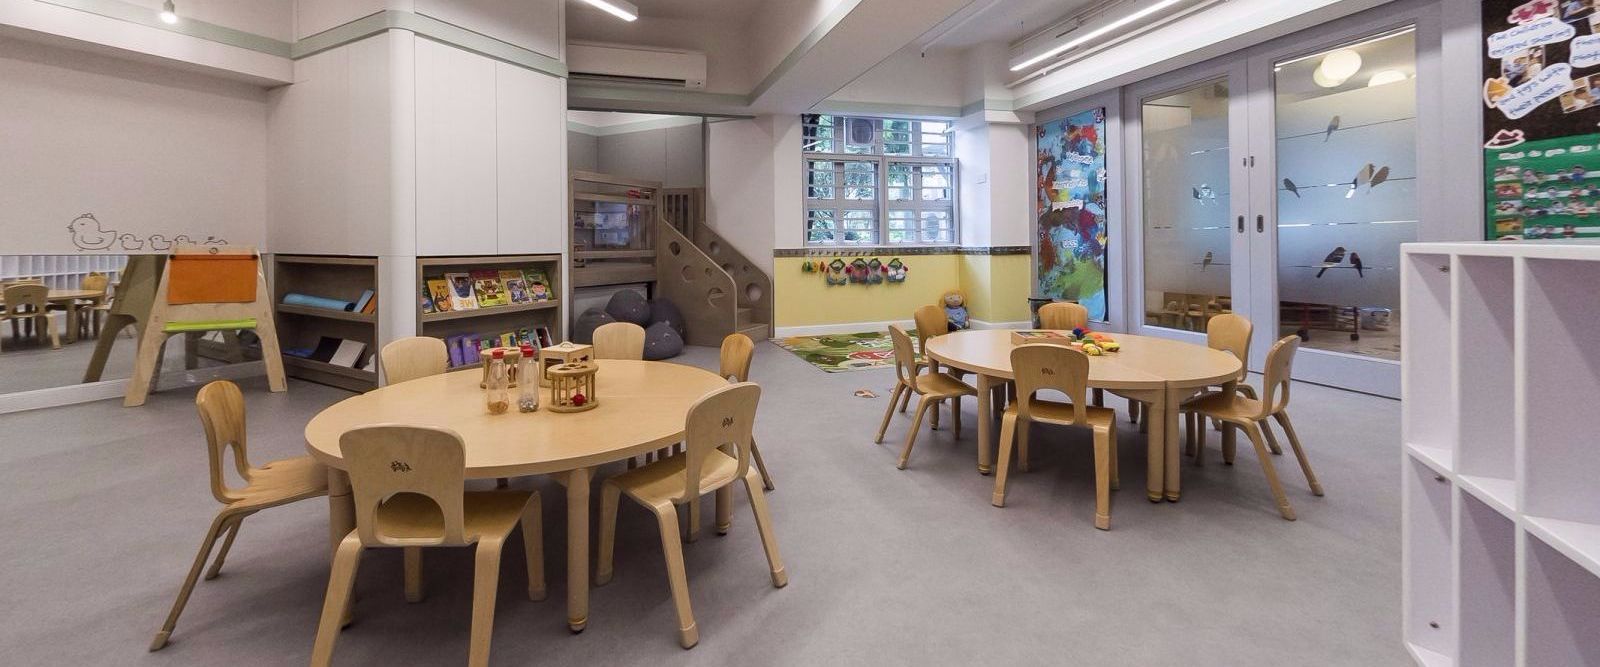 Upper Kornhill | Victoria Kindergarten, Nursery Infant & Toddler Programme